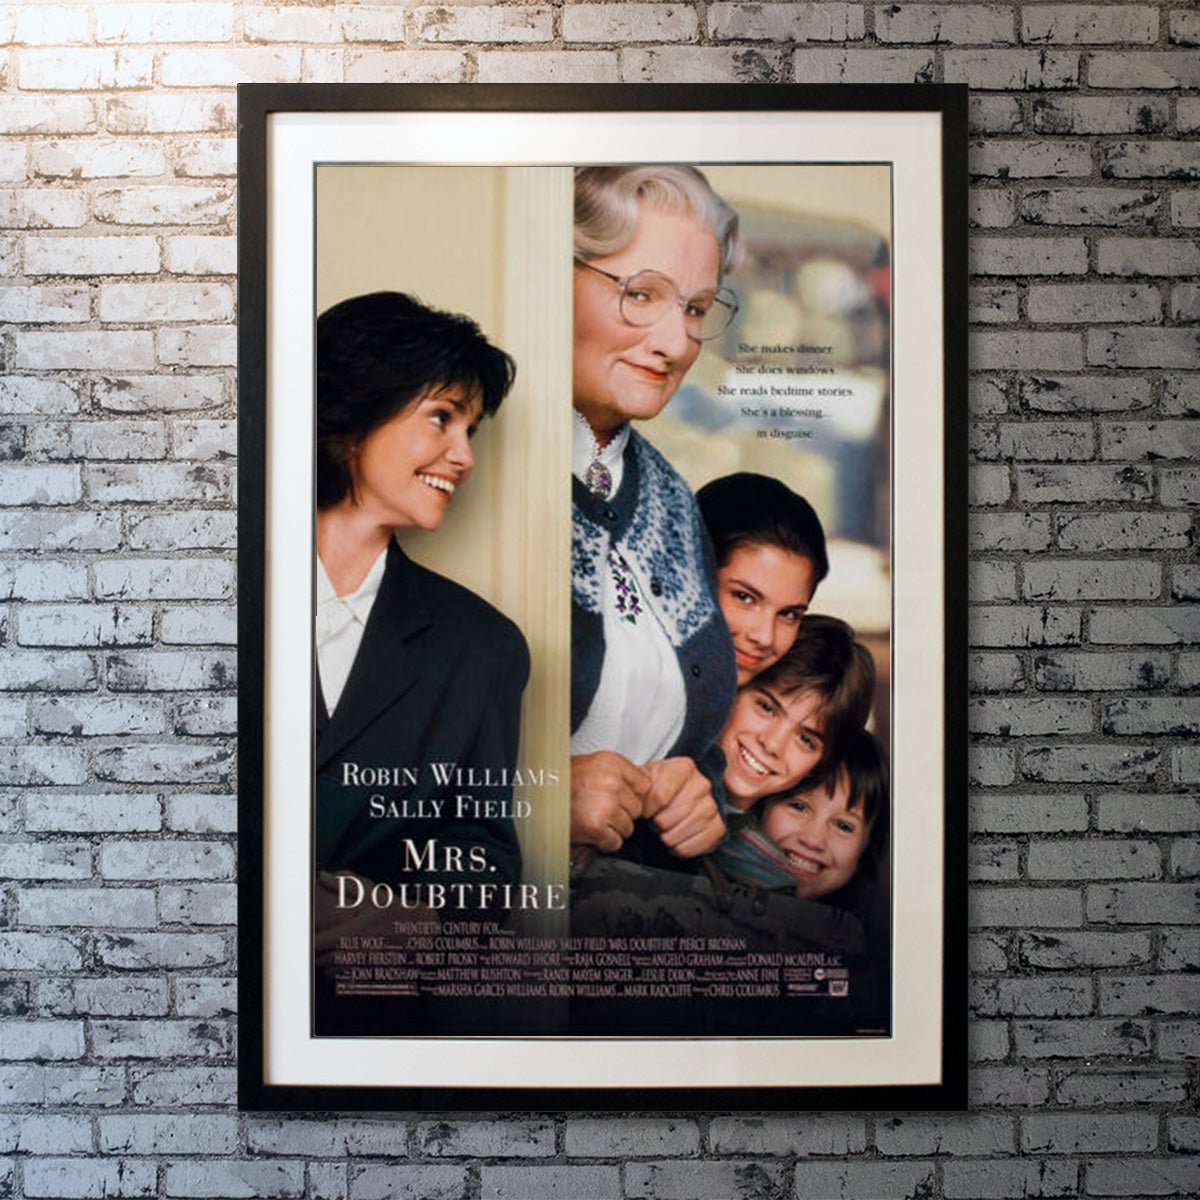 Original Movie Poster of Mrs. Doubtfire (1993)